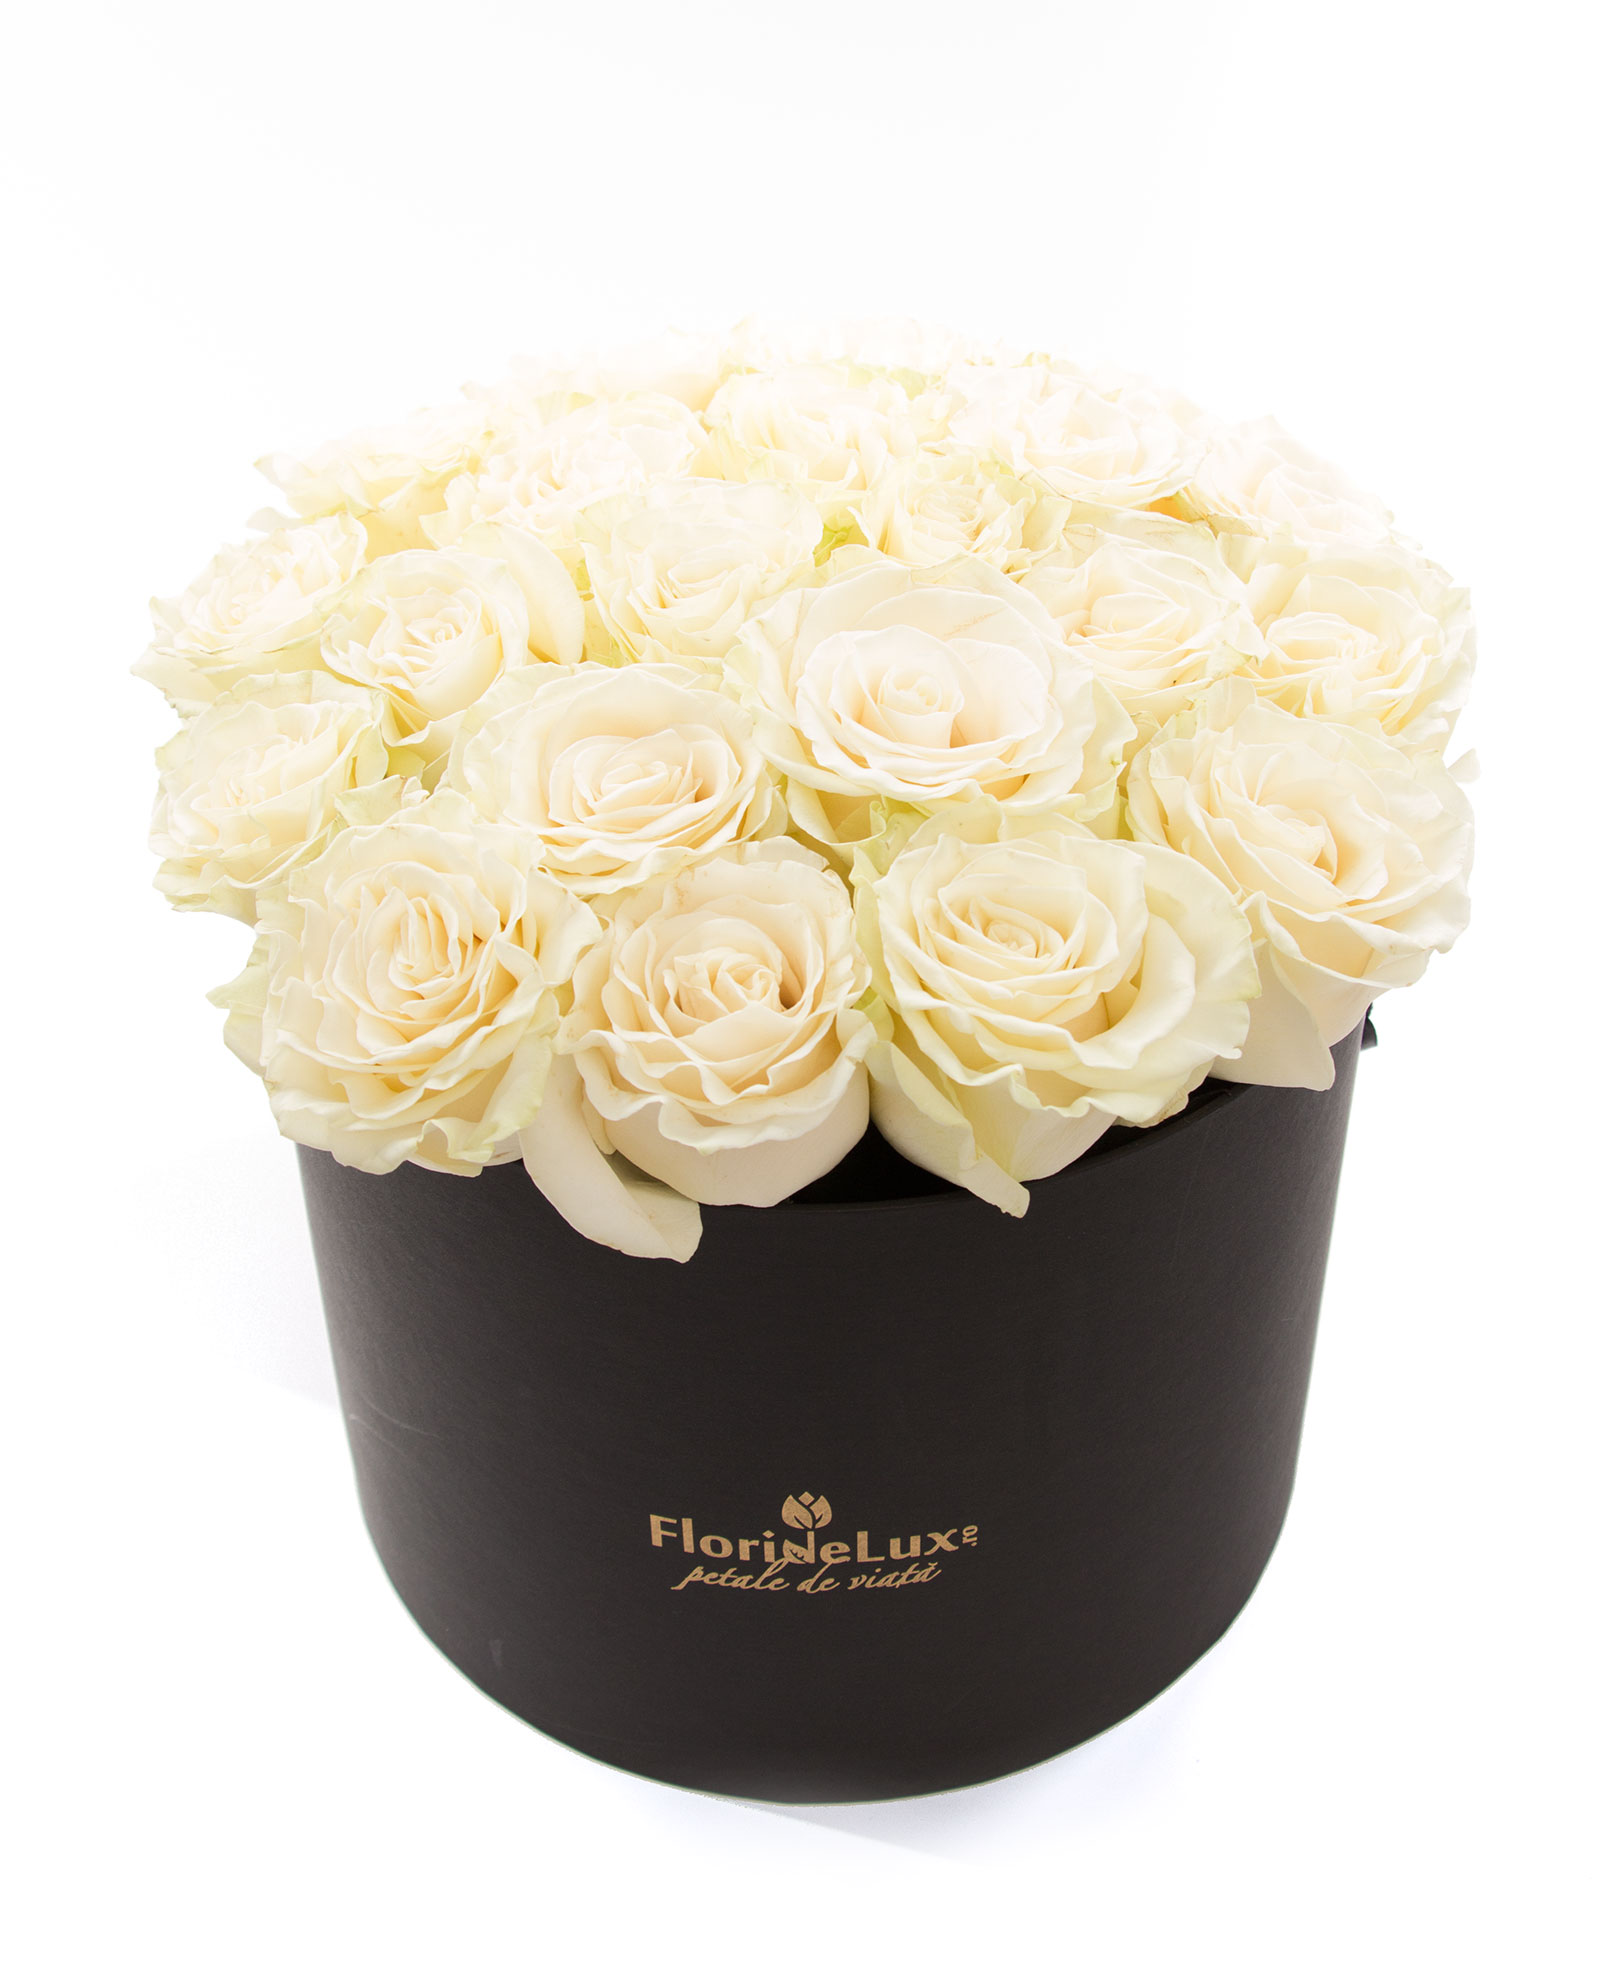 Cutie trandafiri albi Ecuador si vin Tralca